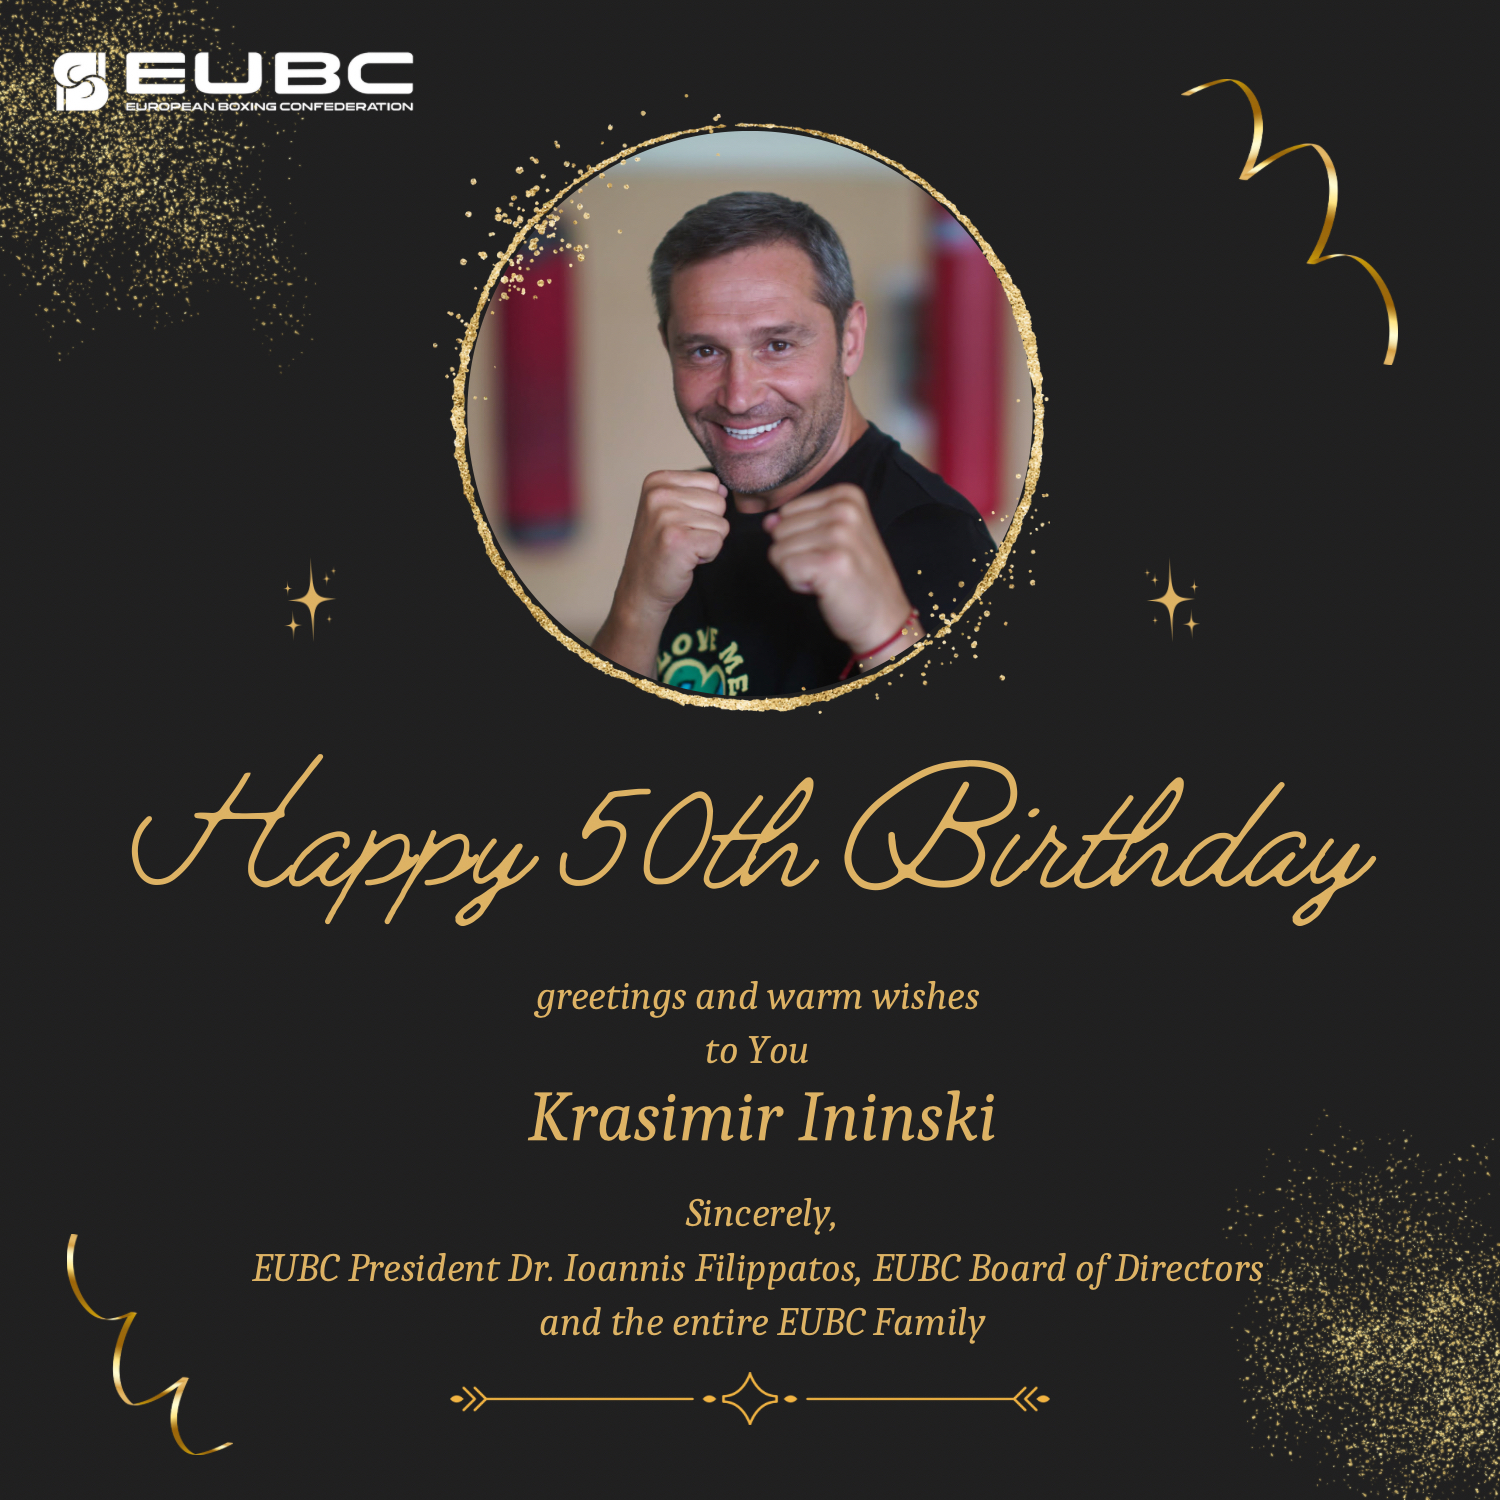 Happy birthday greetings to Director Krasimir Ininski